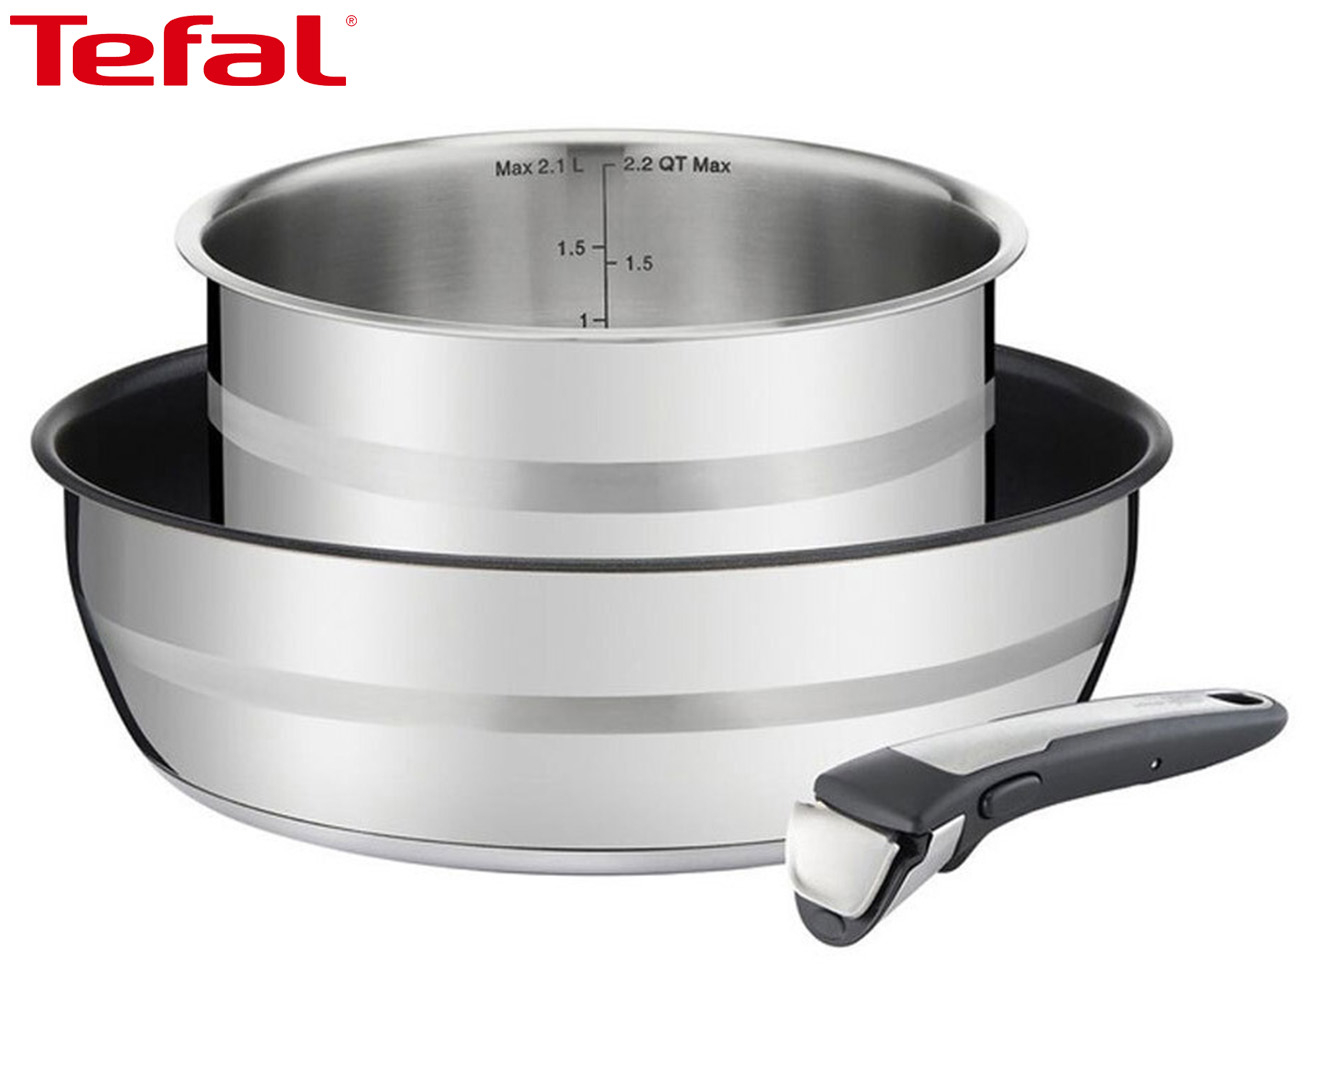 Tefal Simpleo 3pc Stainless Steel Pans Set